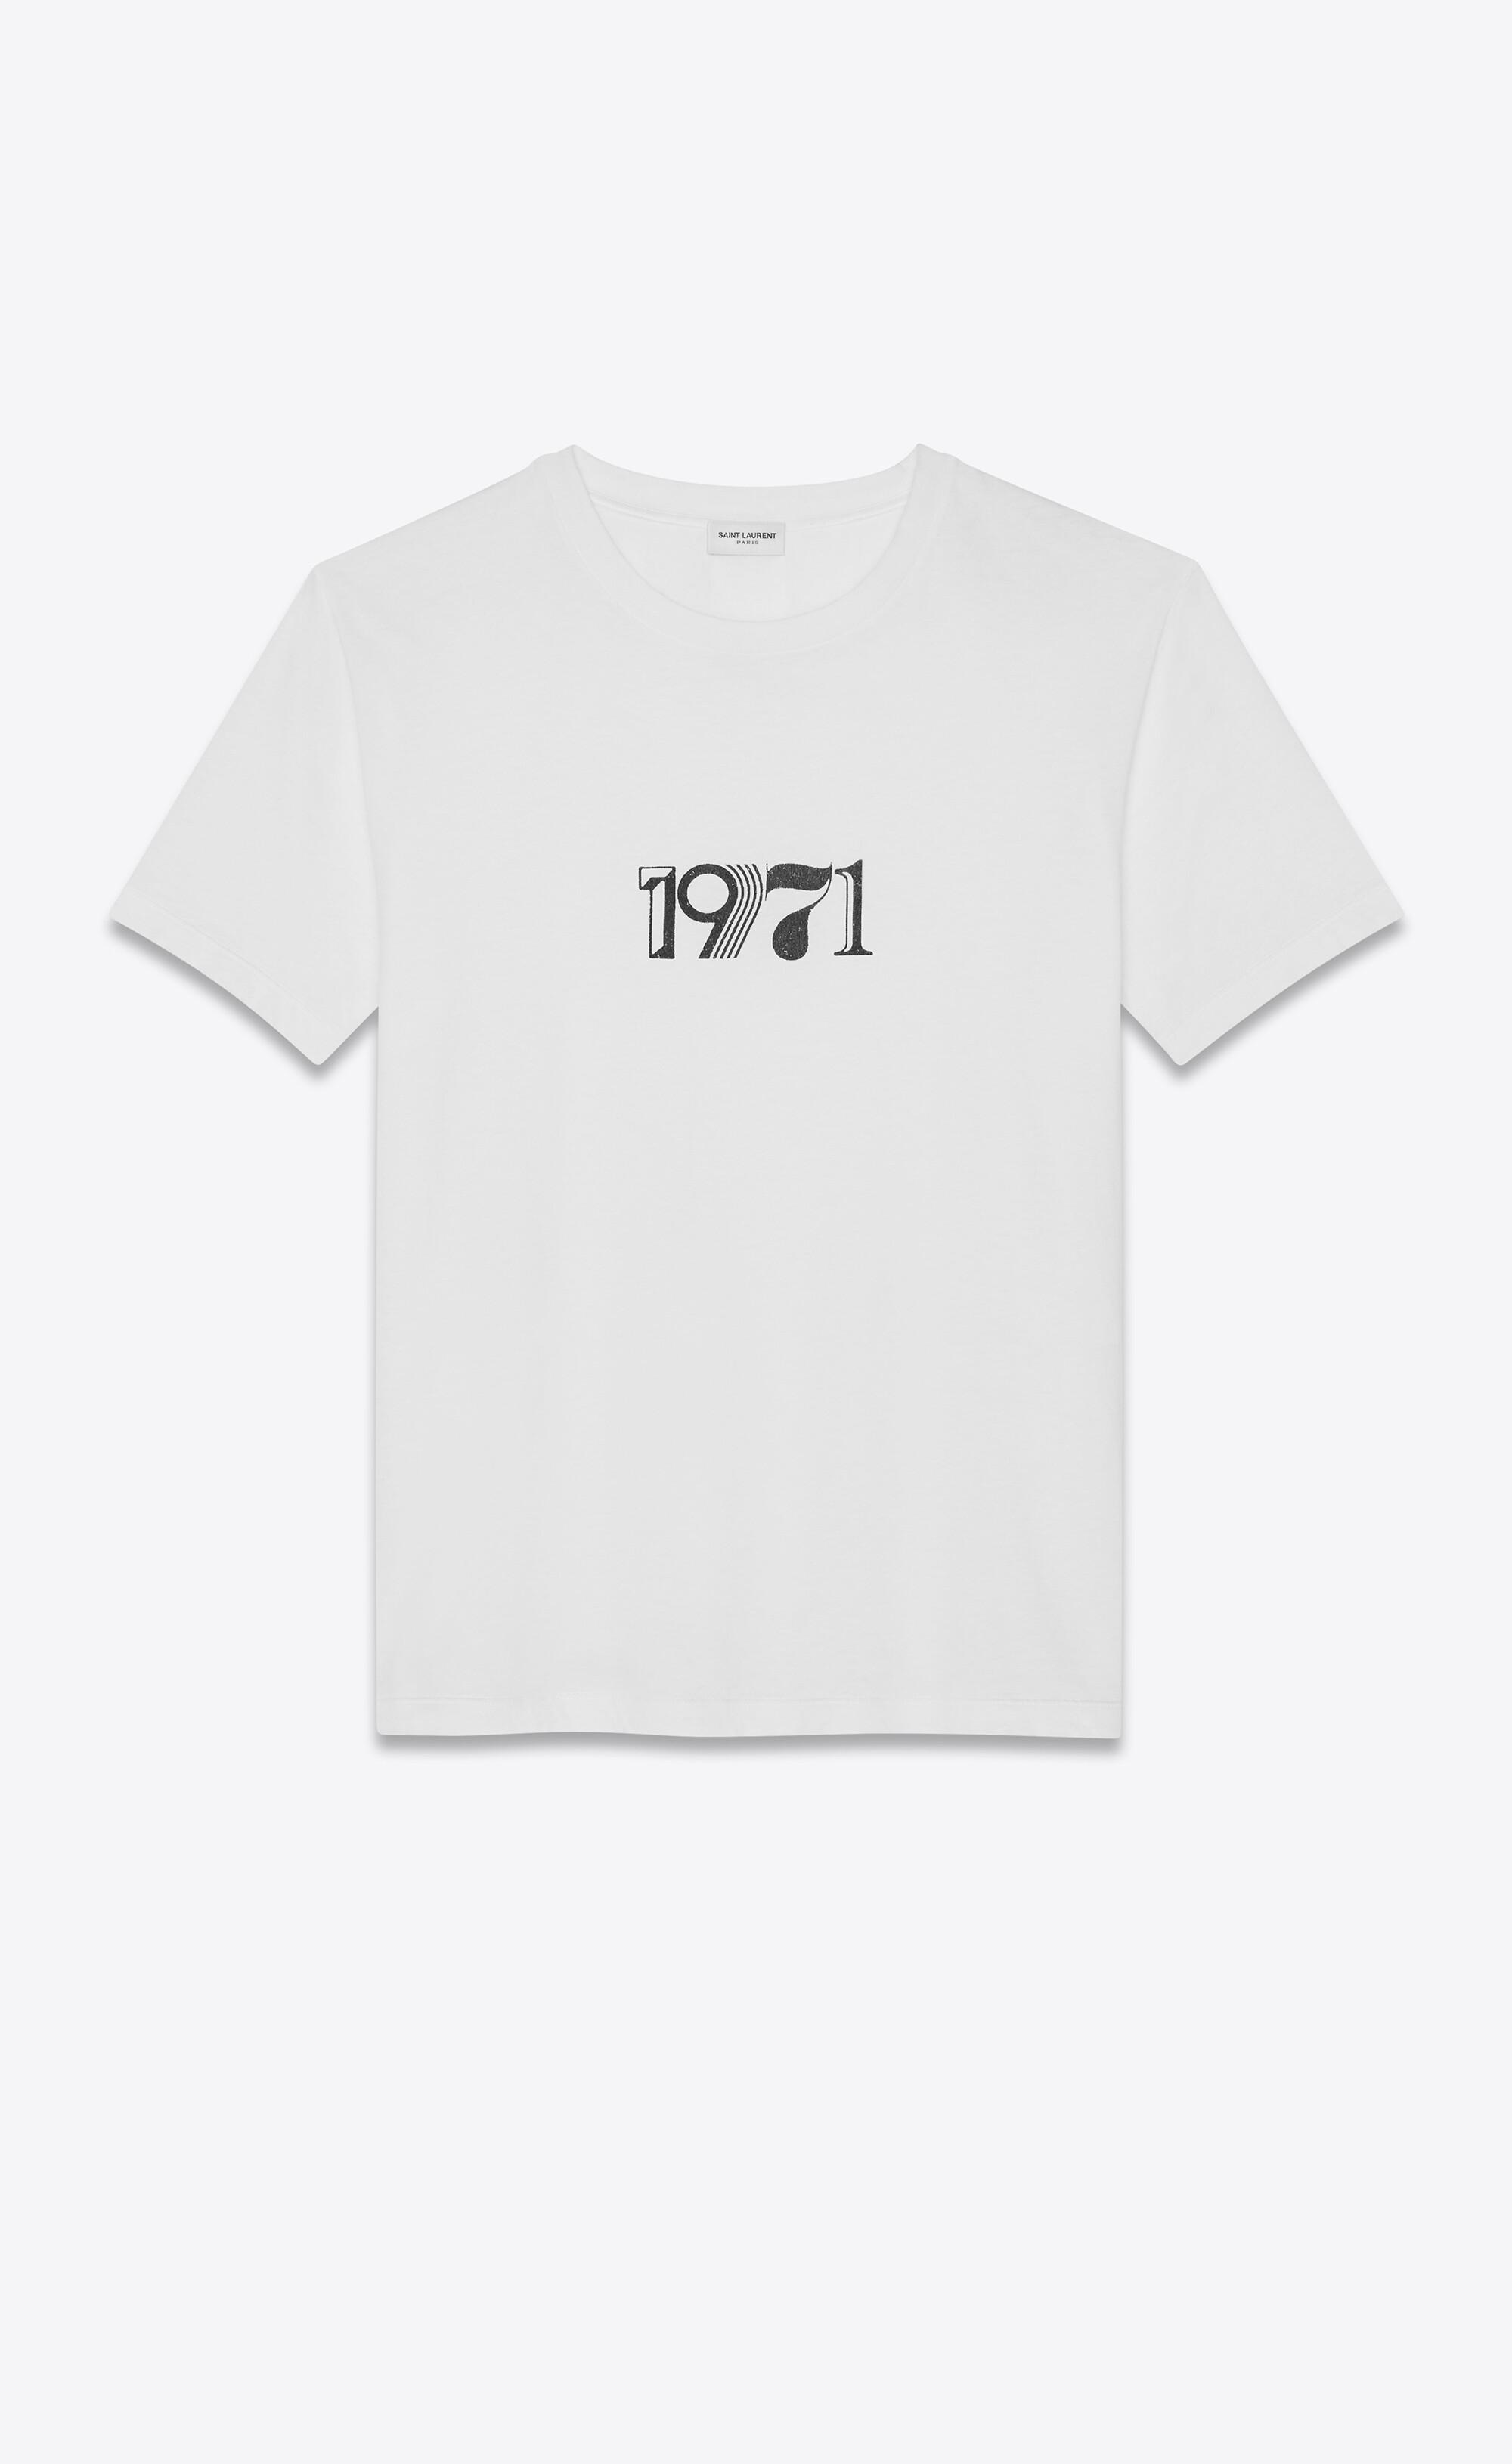 Saint Laurent 1971 T-shirt in Natural for Men - Lyst